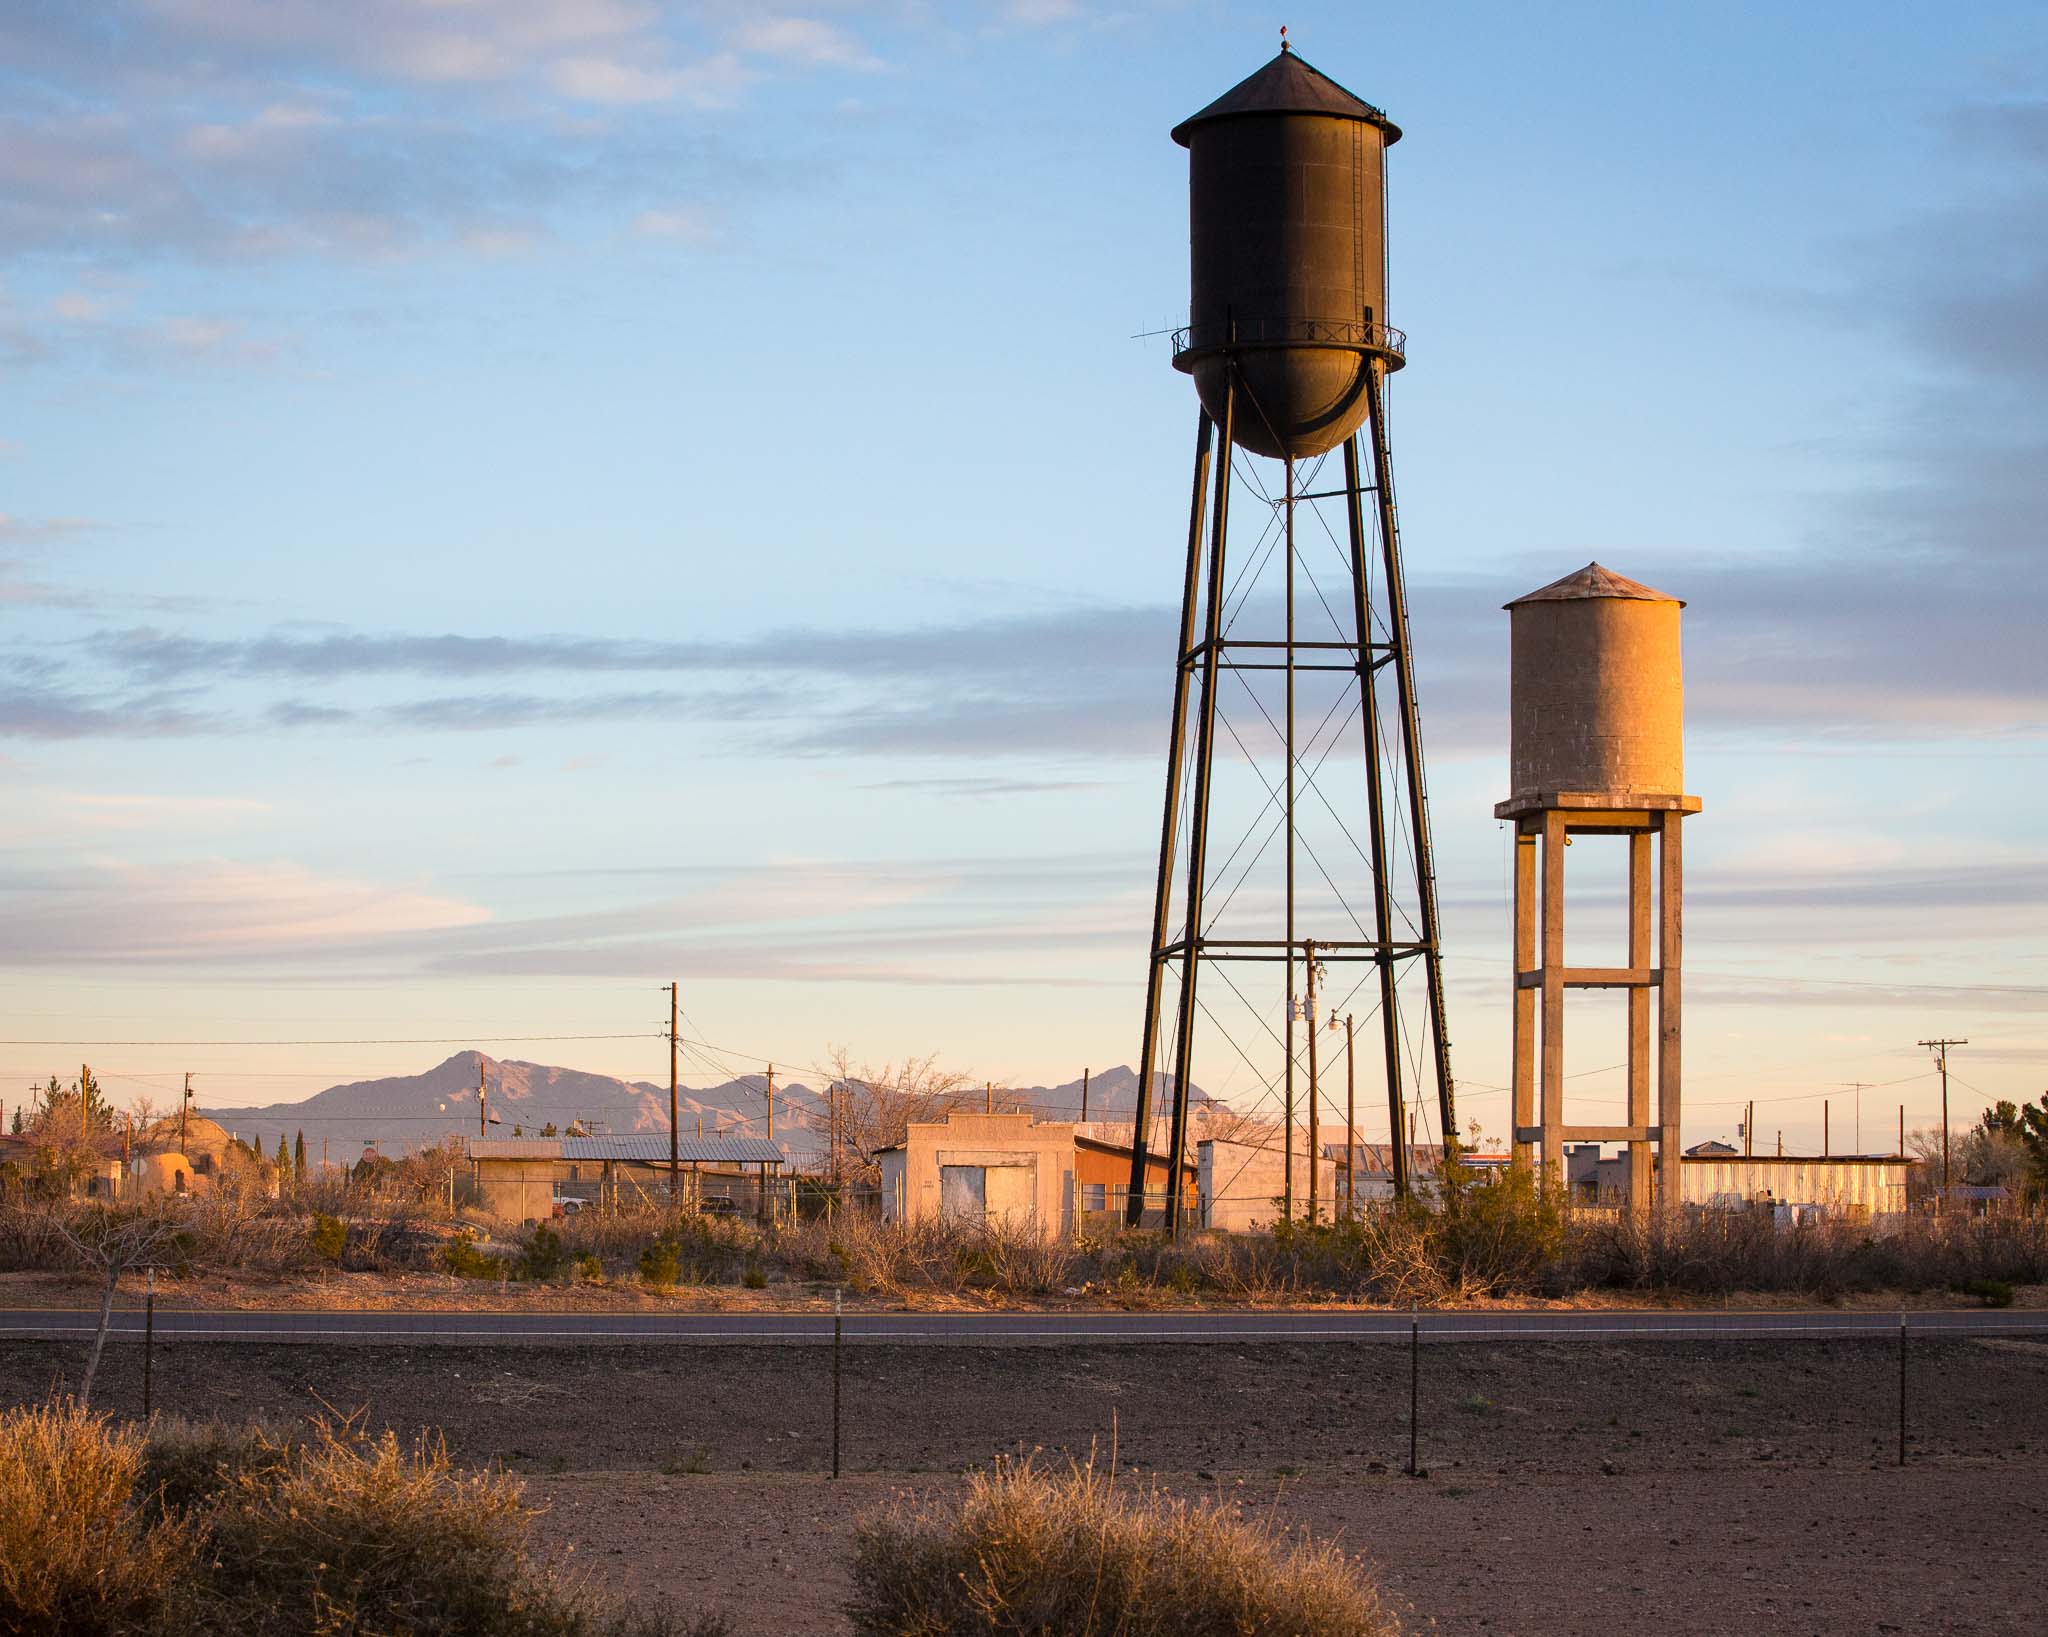 Water towers at sunrise, Columbus NM, February 20, 2015